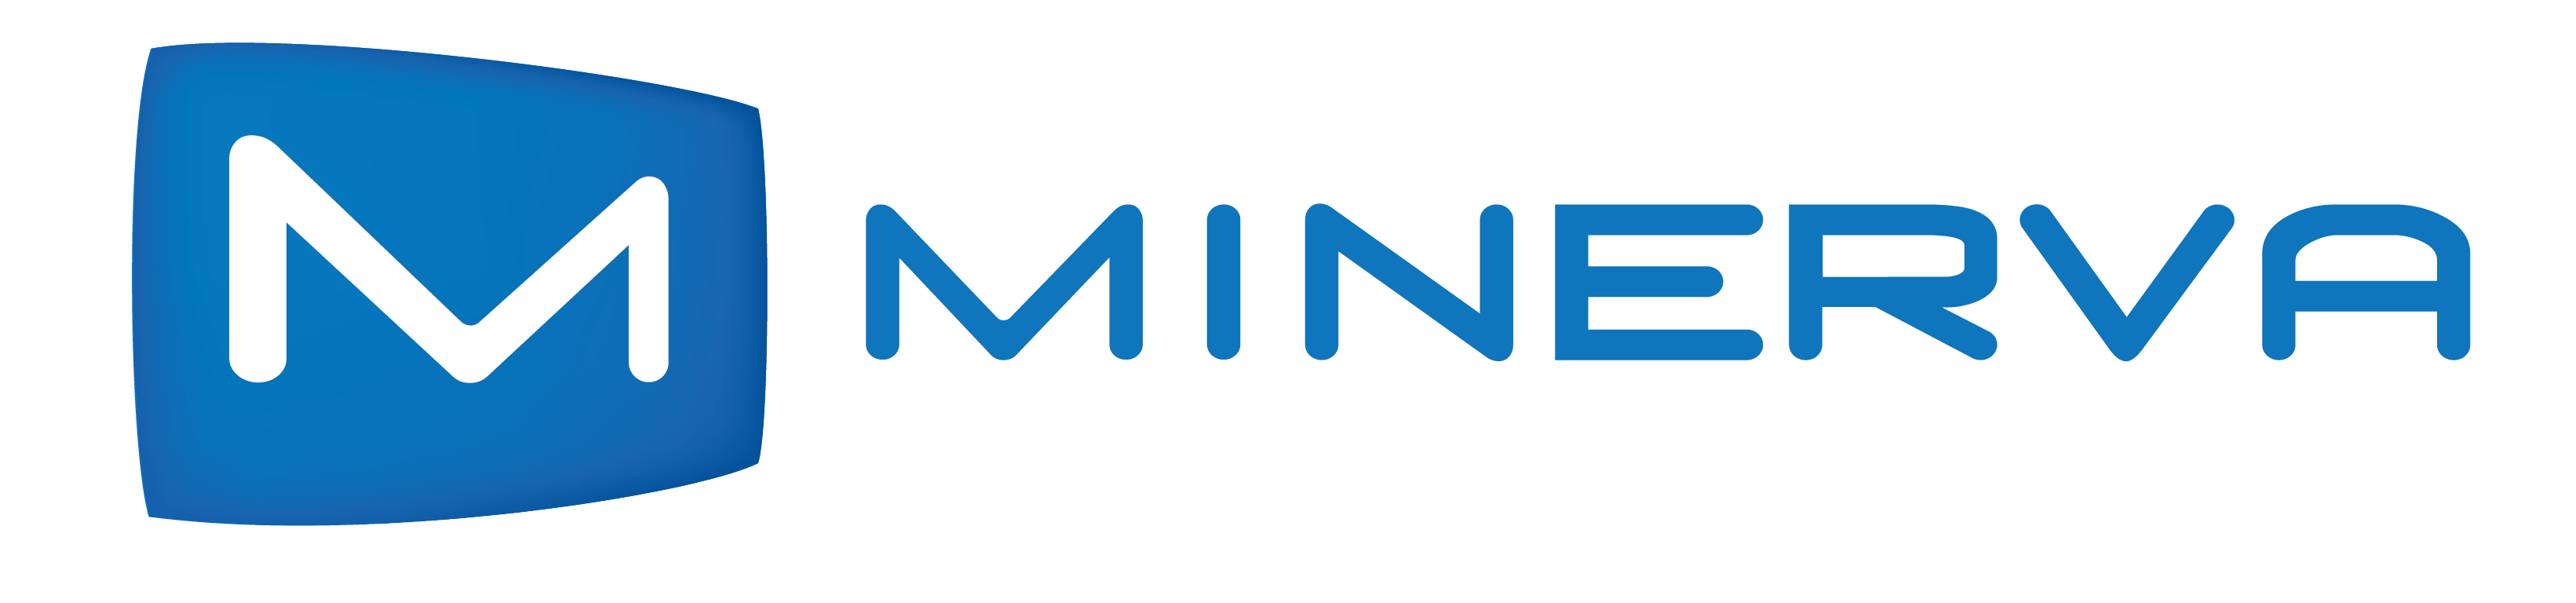 Skymedia Corporation Upgrades to Minerva 10 Platform to Power Next Generation Television Services